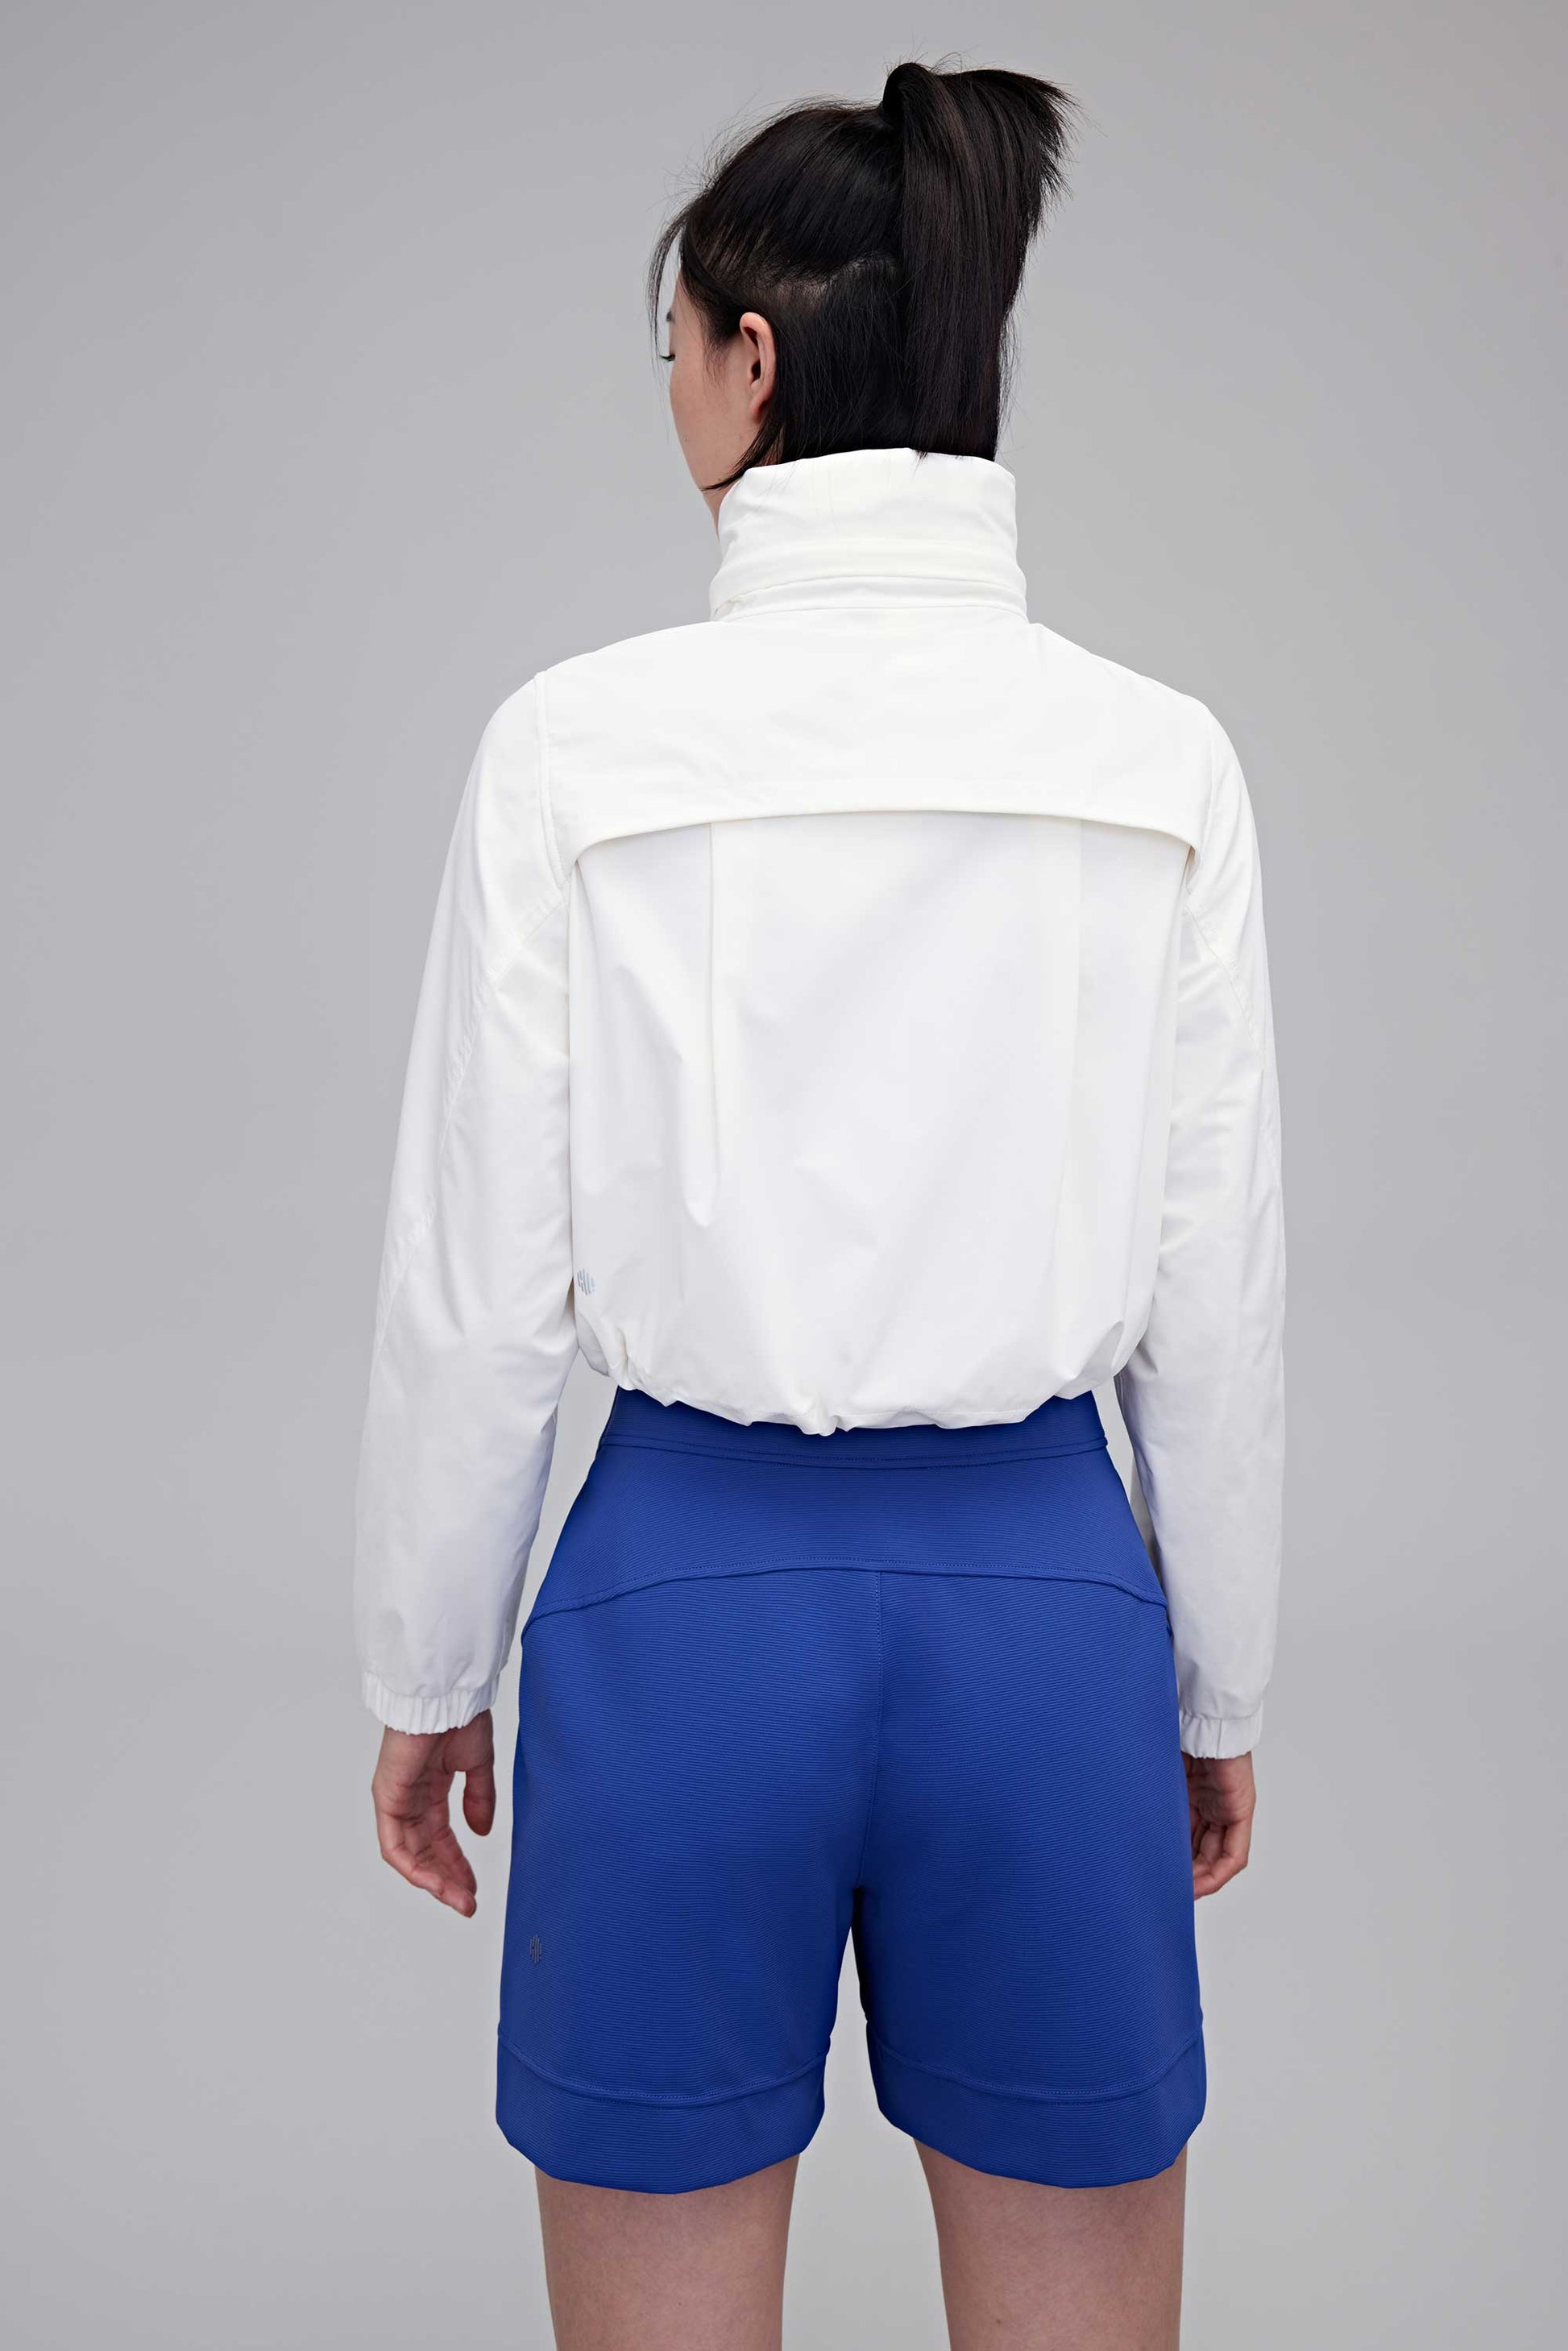 back of white jackets and blue shorts